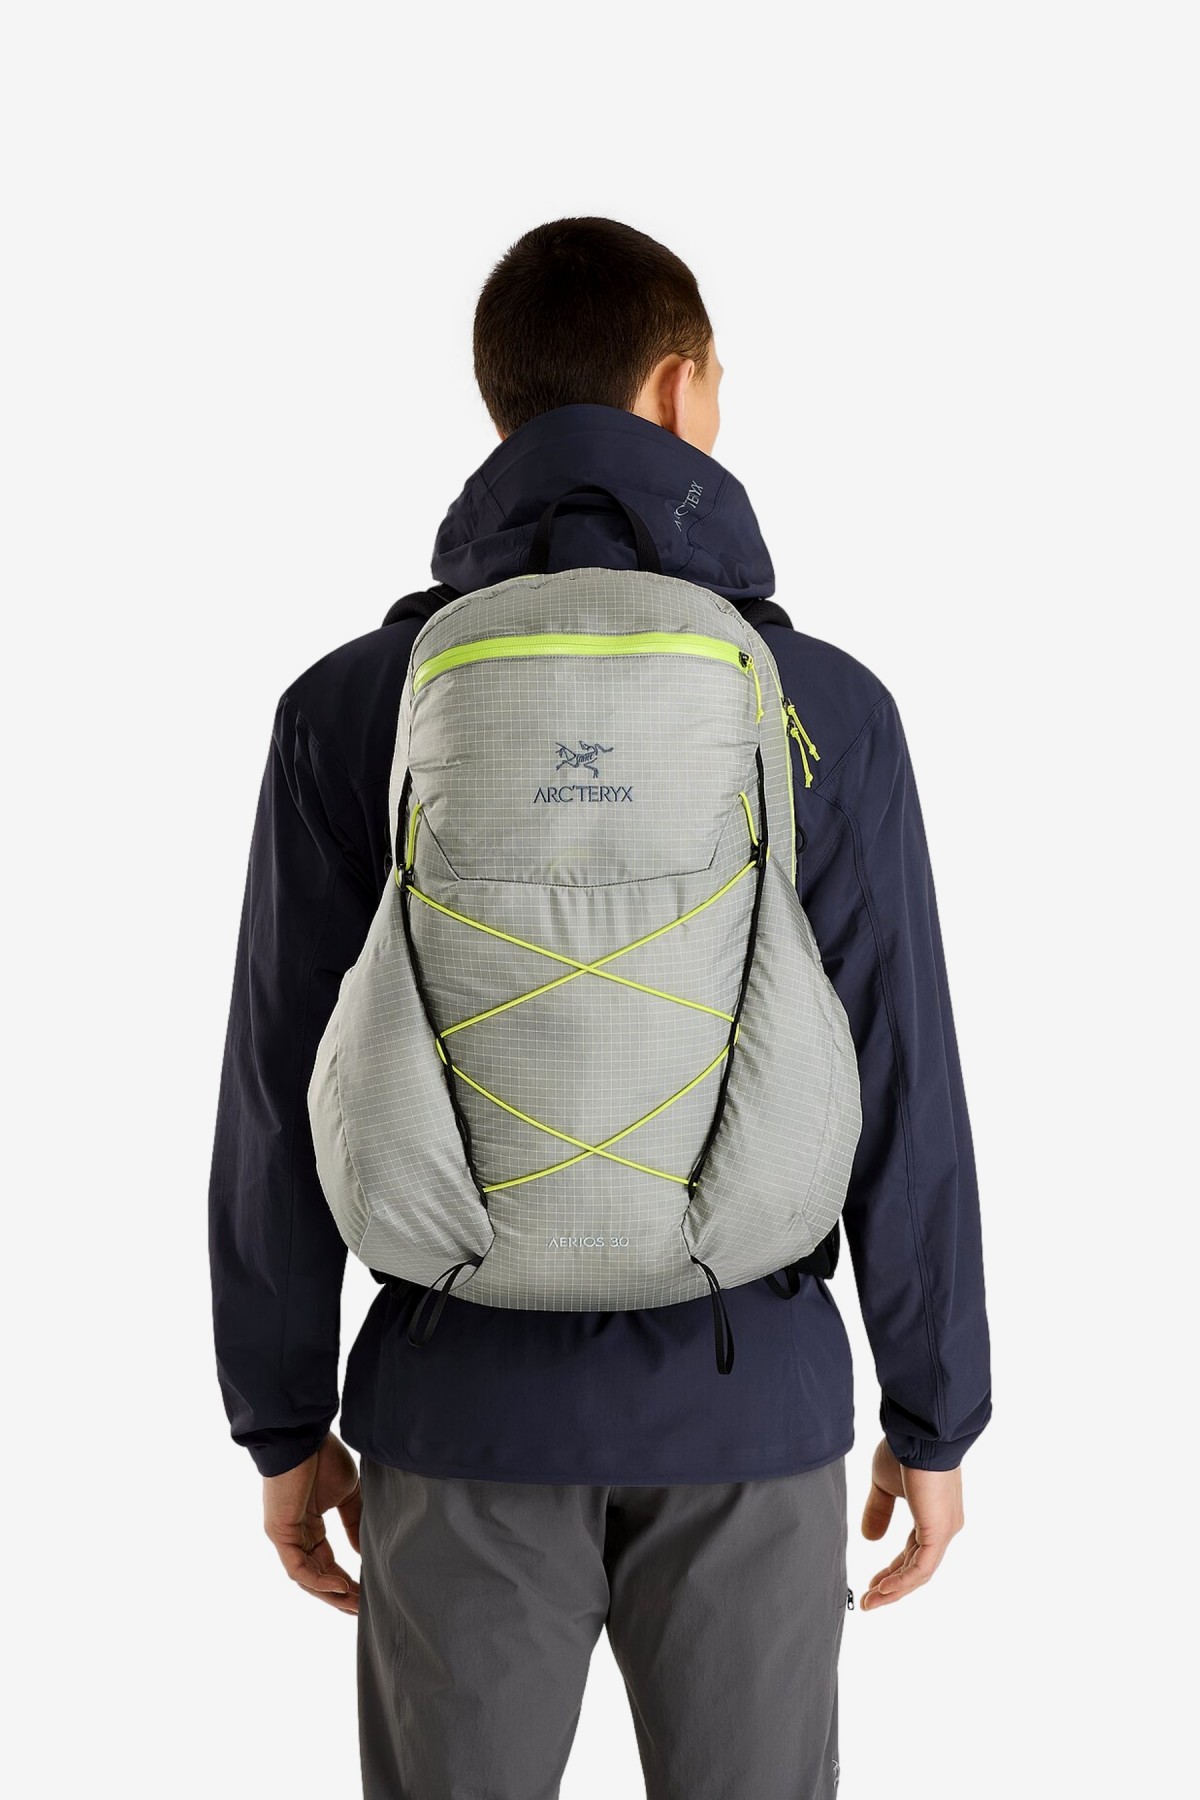 Arc'teryx Aerios 30 Backpack in Pixel/Sprint